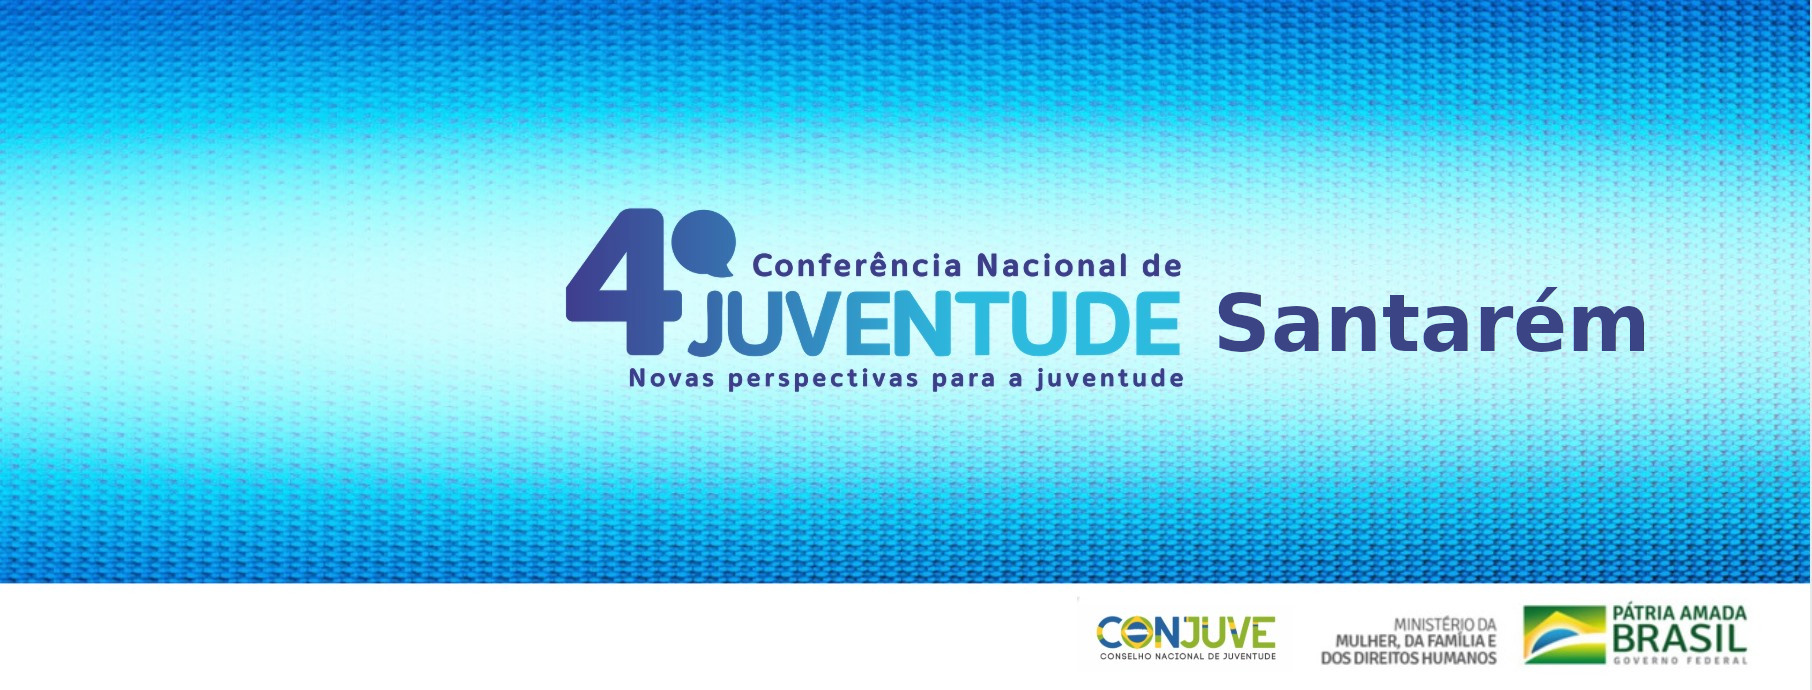 Conferência da Juventude Santarém-Pará